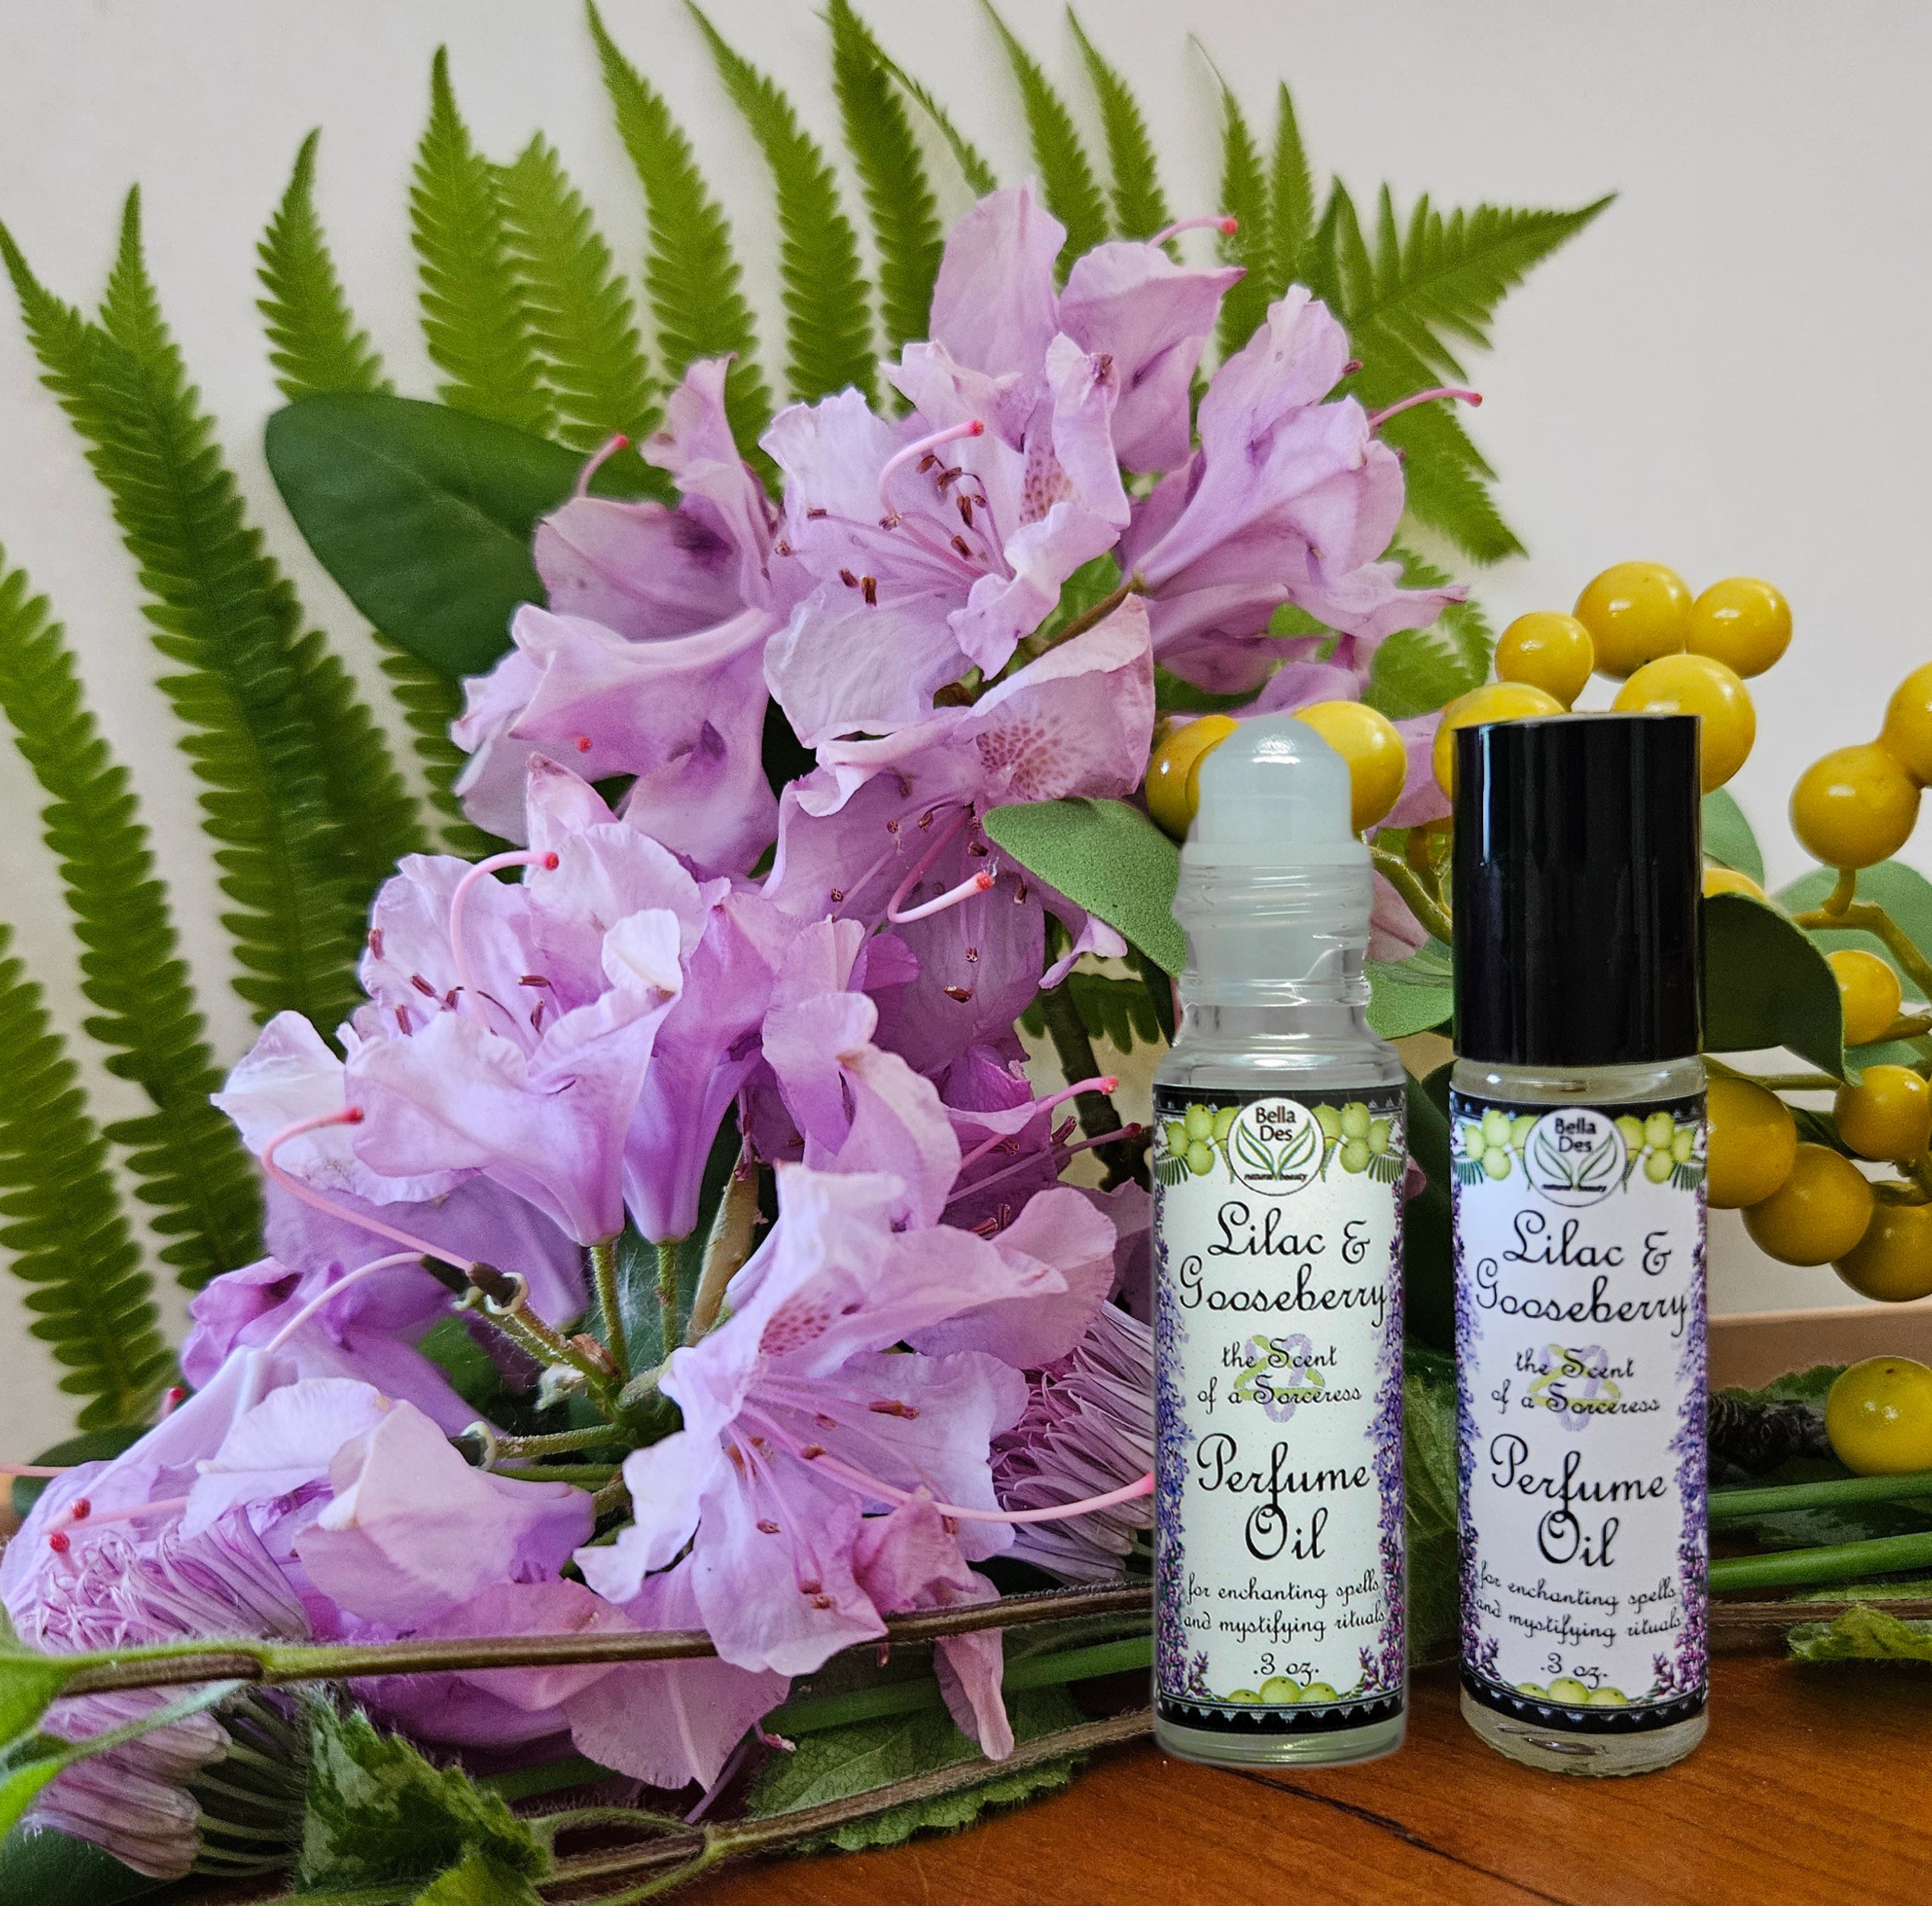 Organic Lilac Essential Oil